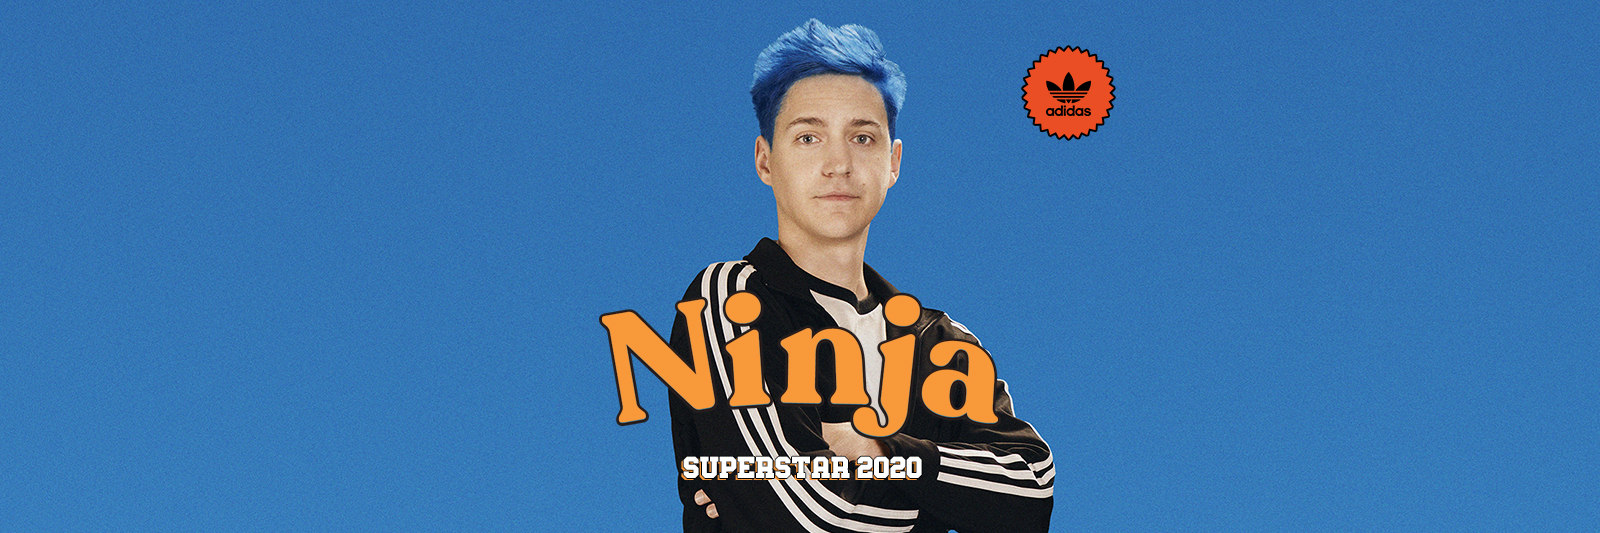 adidas ninja superstar